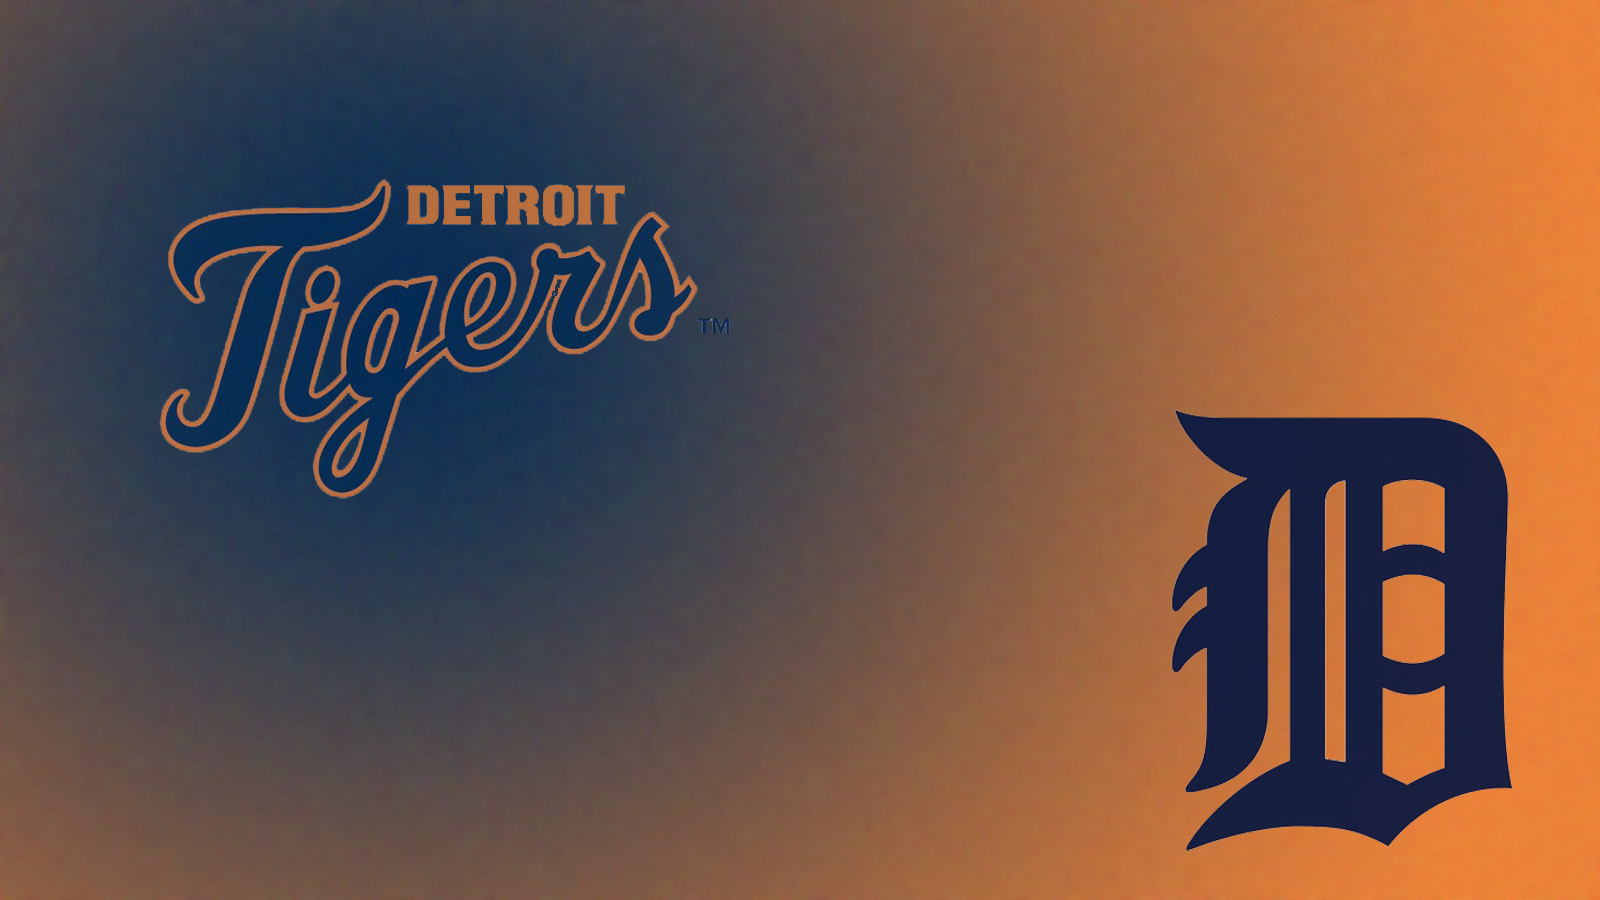 MLB Detroit Tigers wallpaper HD. Free desktop background 2016 in